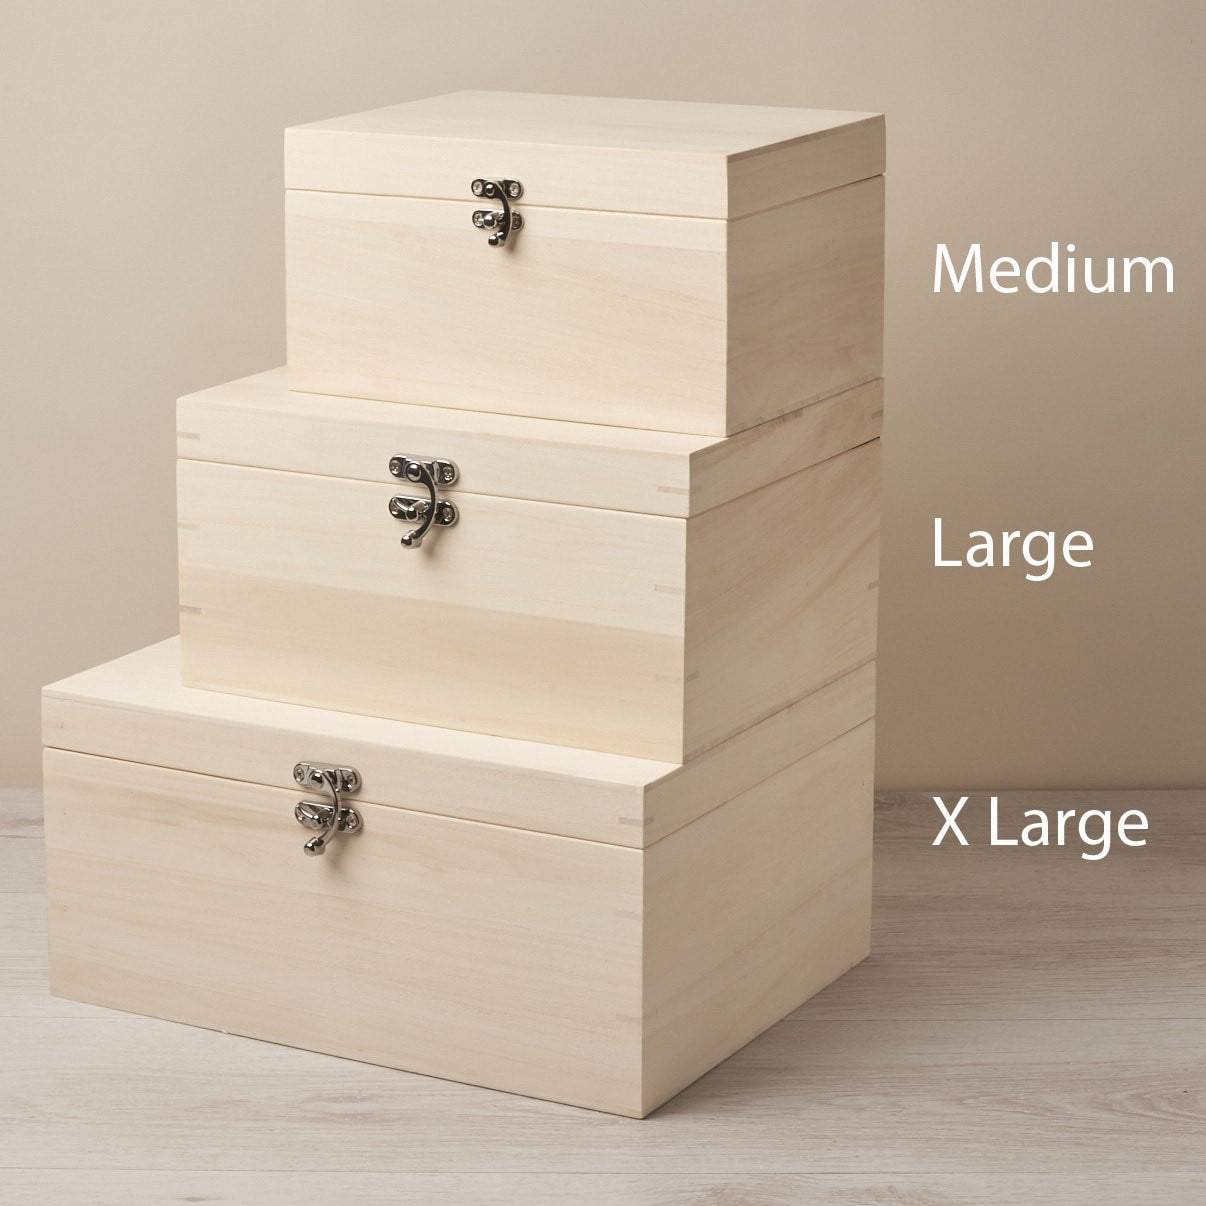 Keepsake Box - Personalised Wooden Wedding Or Birthday Keepsake Memory Box - Roman Numerals